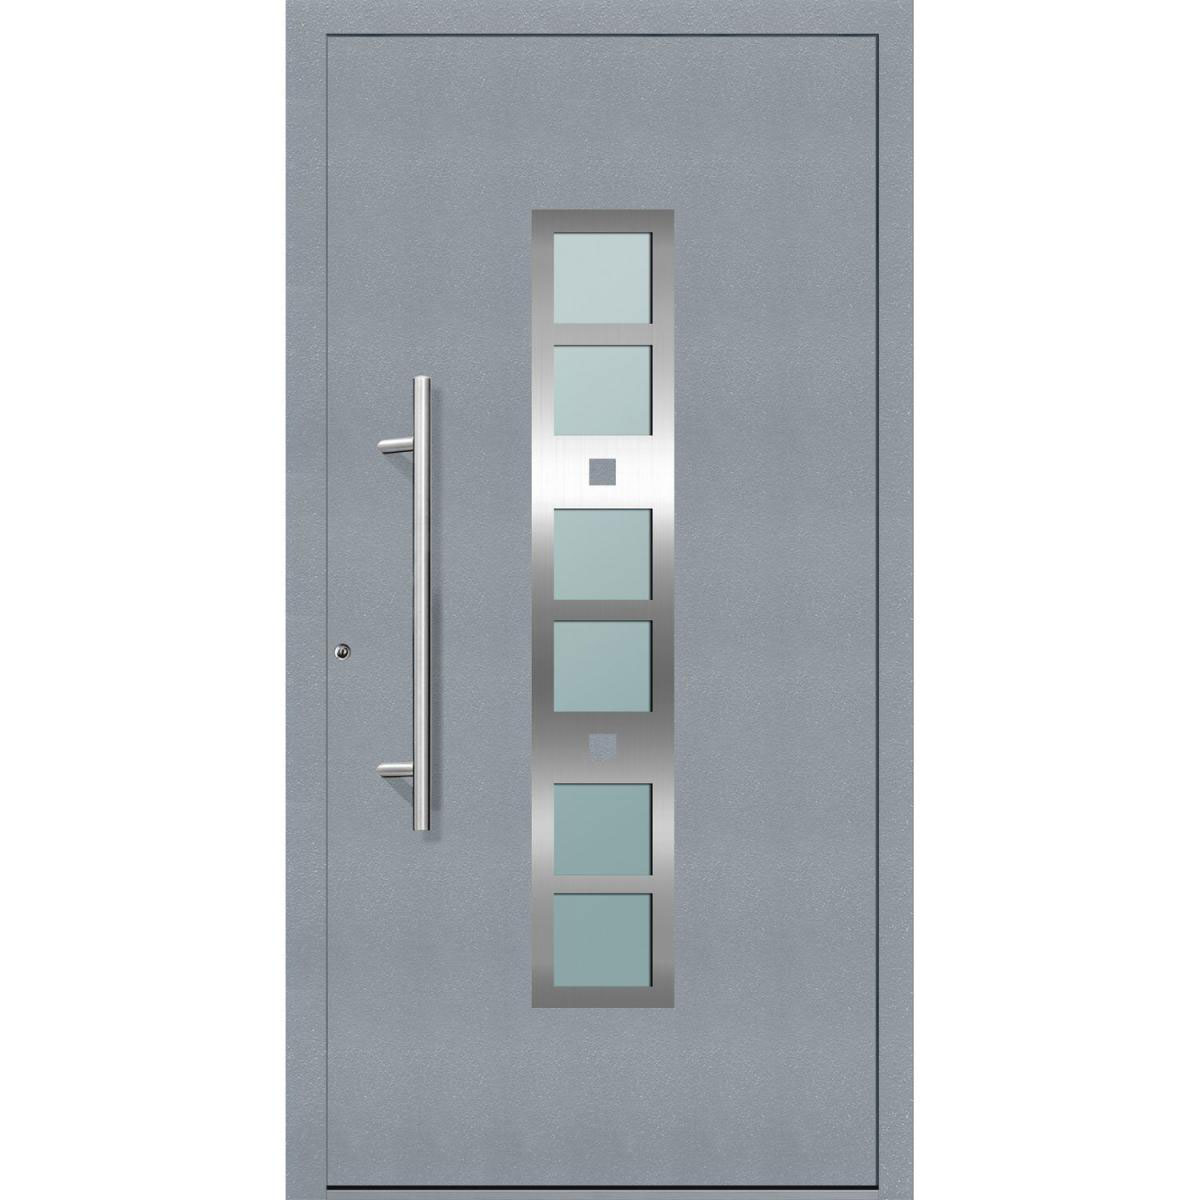 Aluminium Sicherheits-Haustür „Pisa Exklusiv“, 75mm, grau, 110x210 cm, Anschlag links, inkl. Griffset